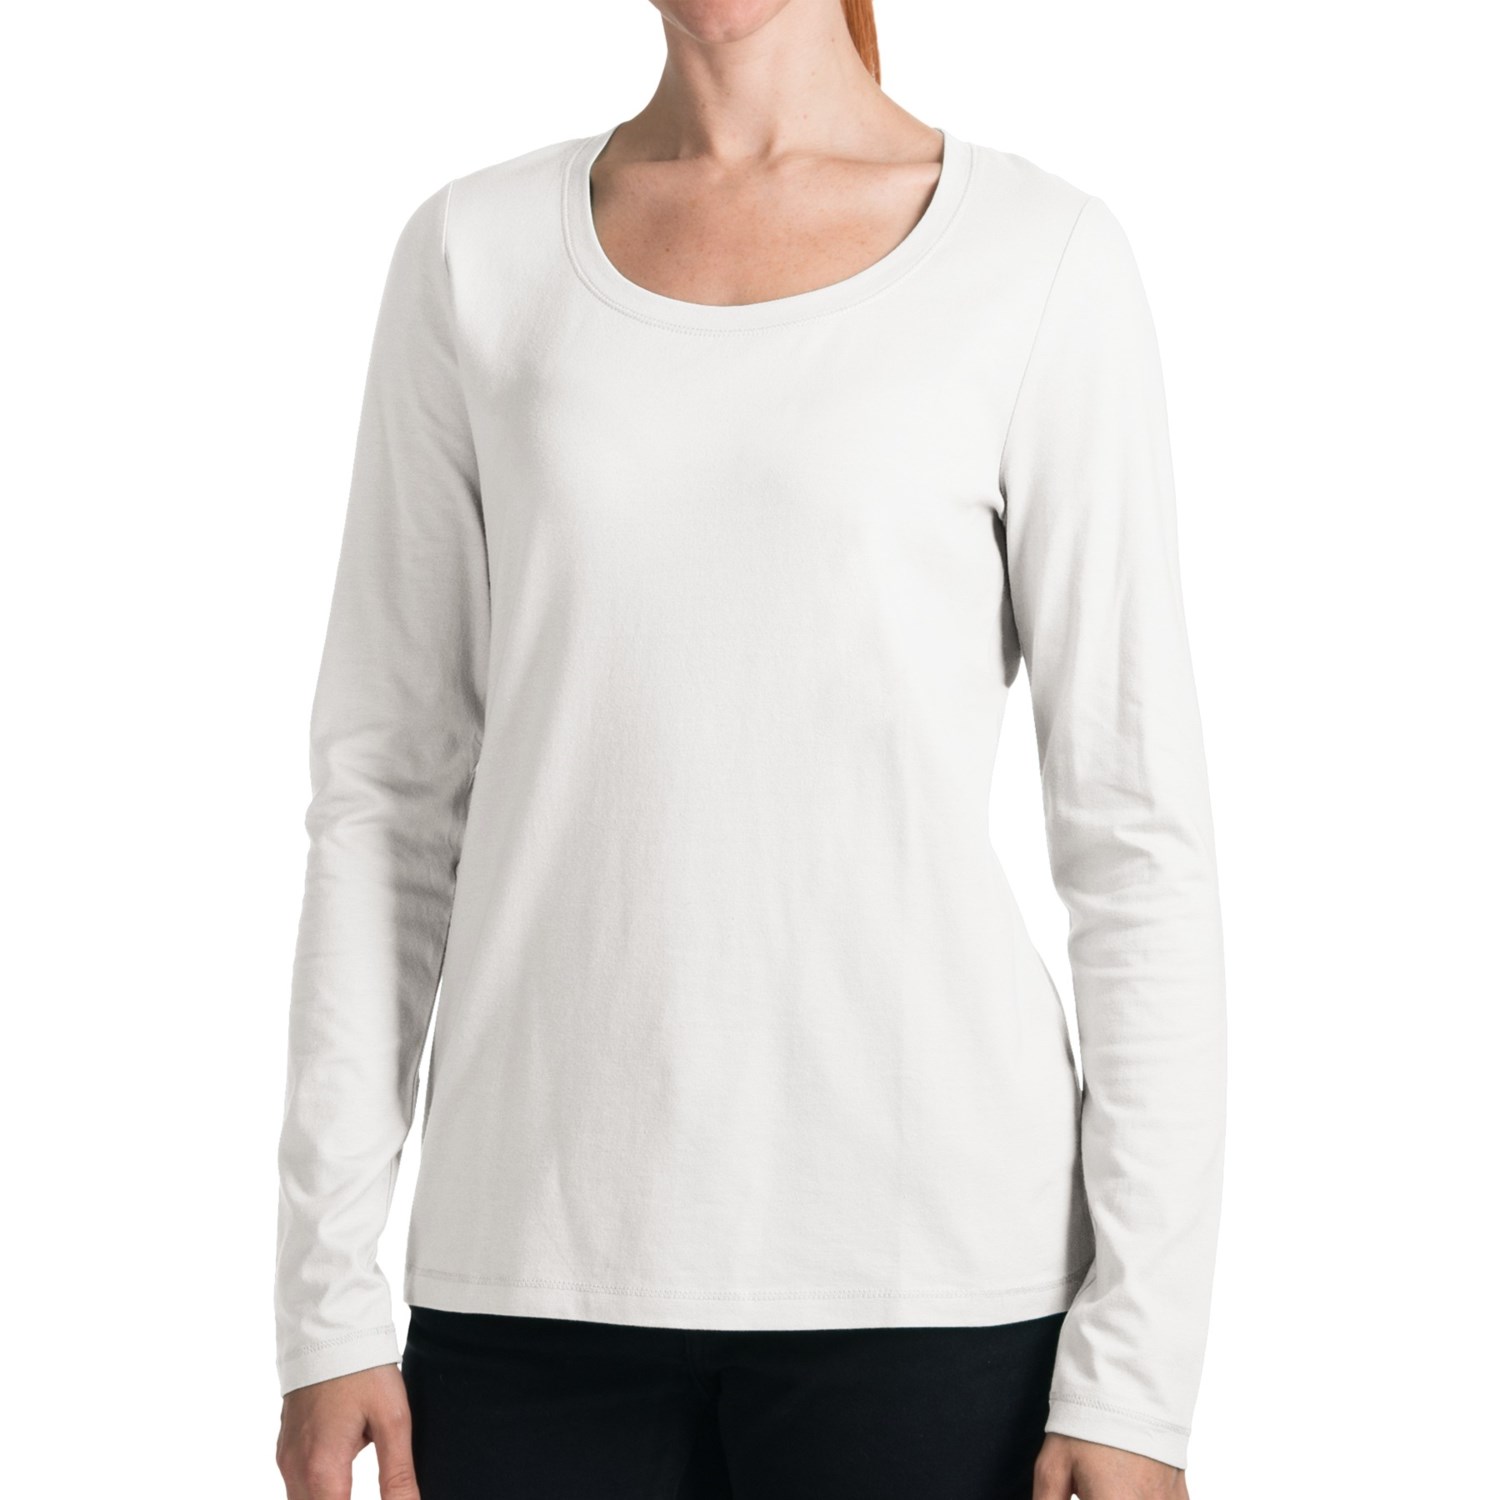 Stretch Cotton Knit Shirt (For Women) 6203W 68